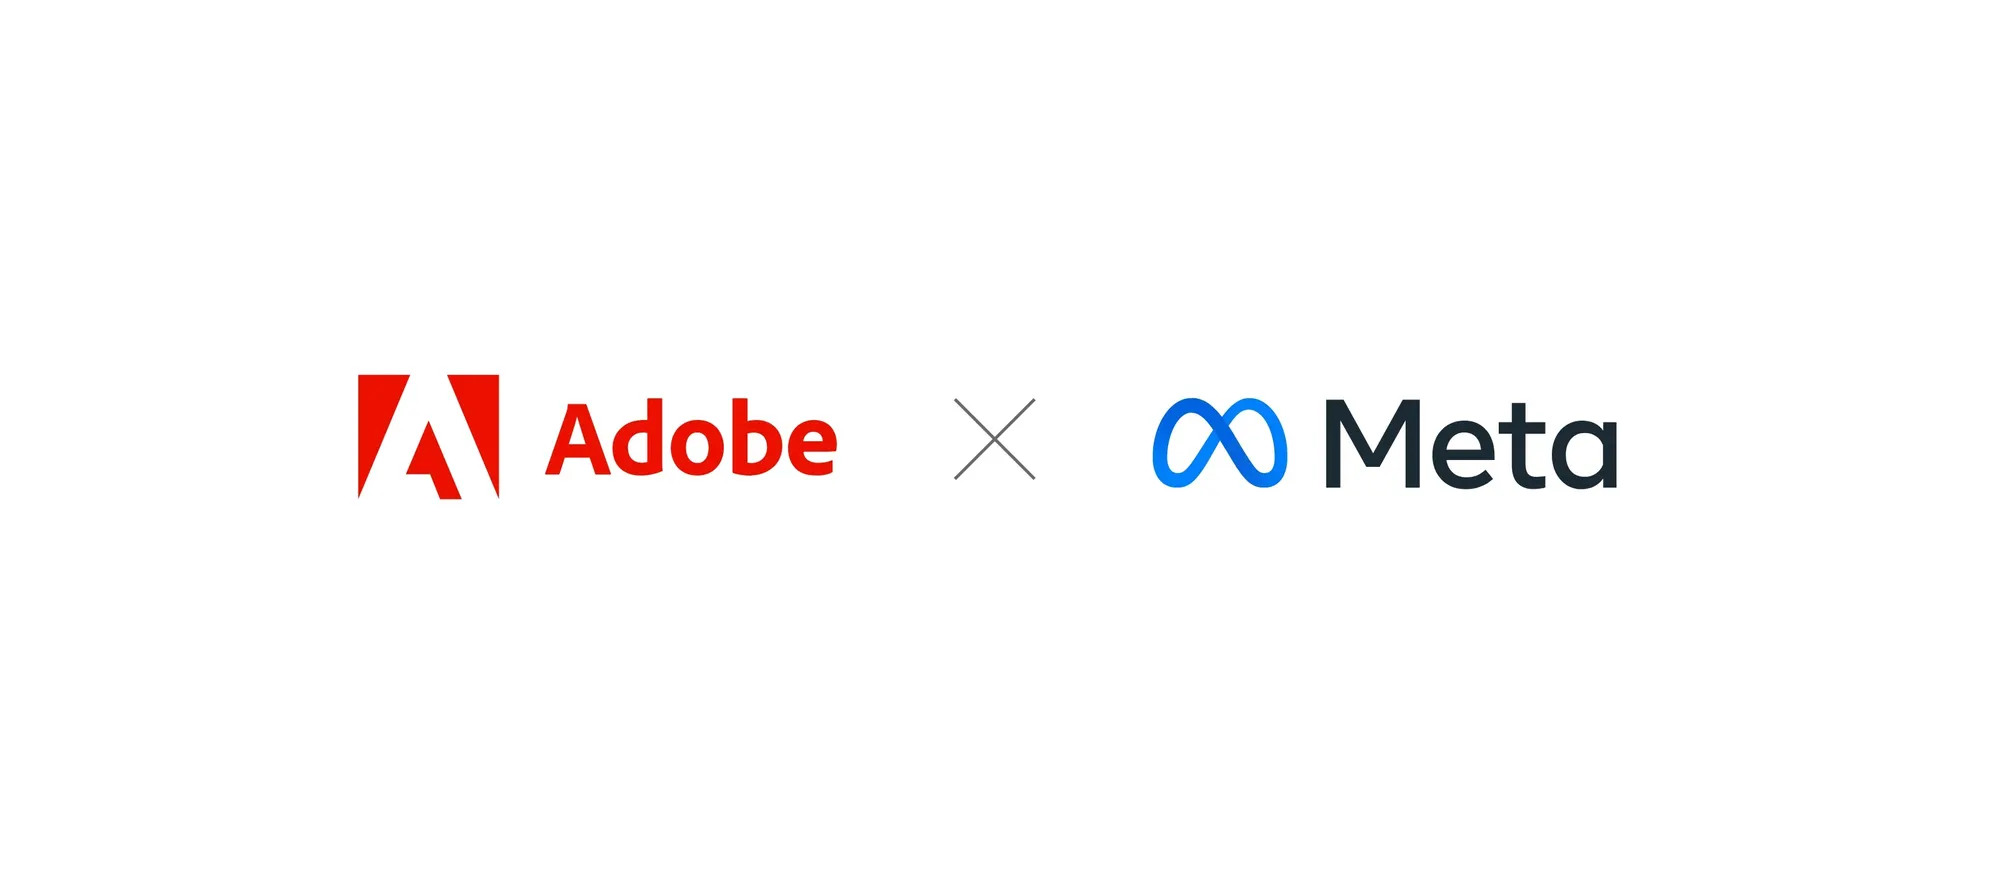 Adobe and Meta. 